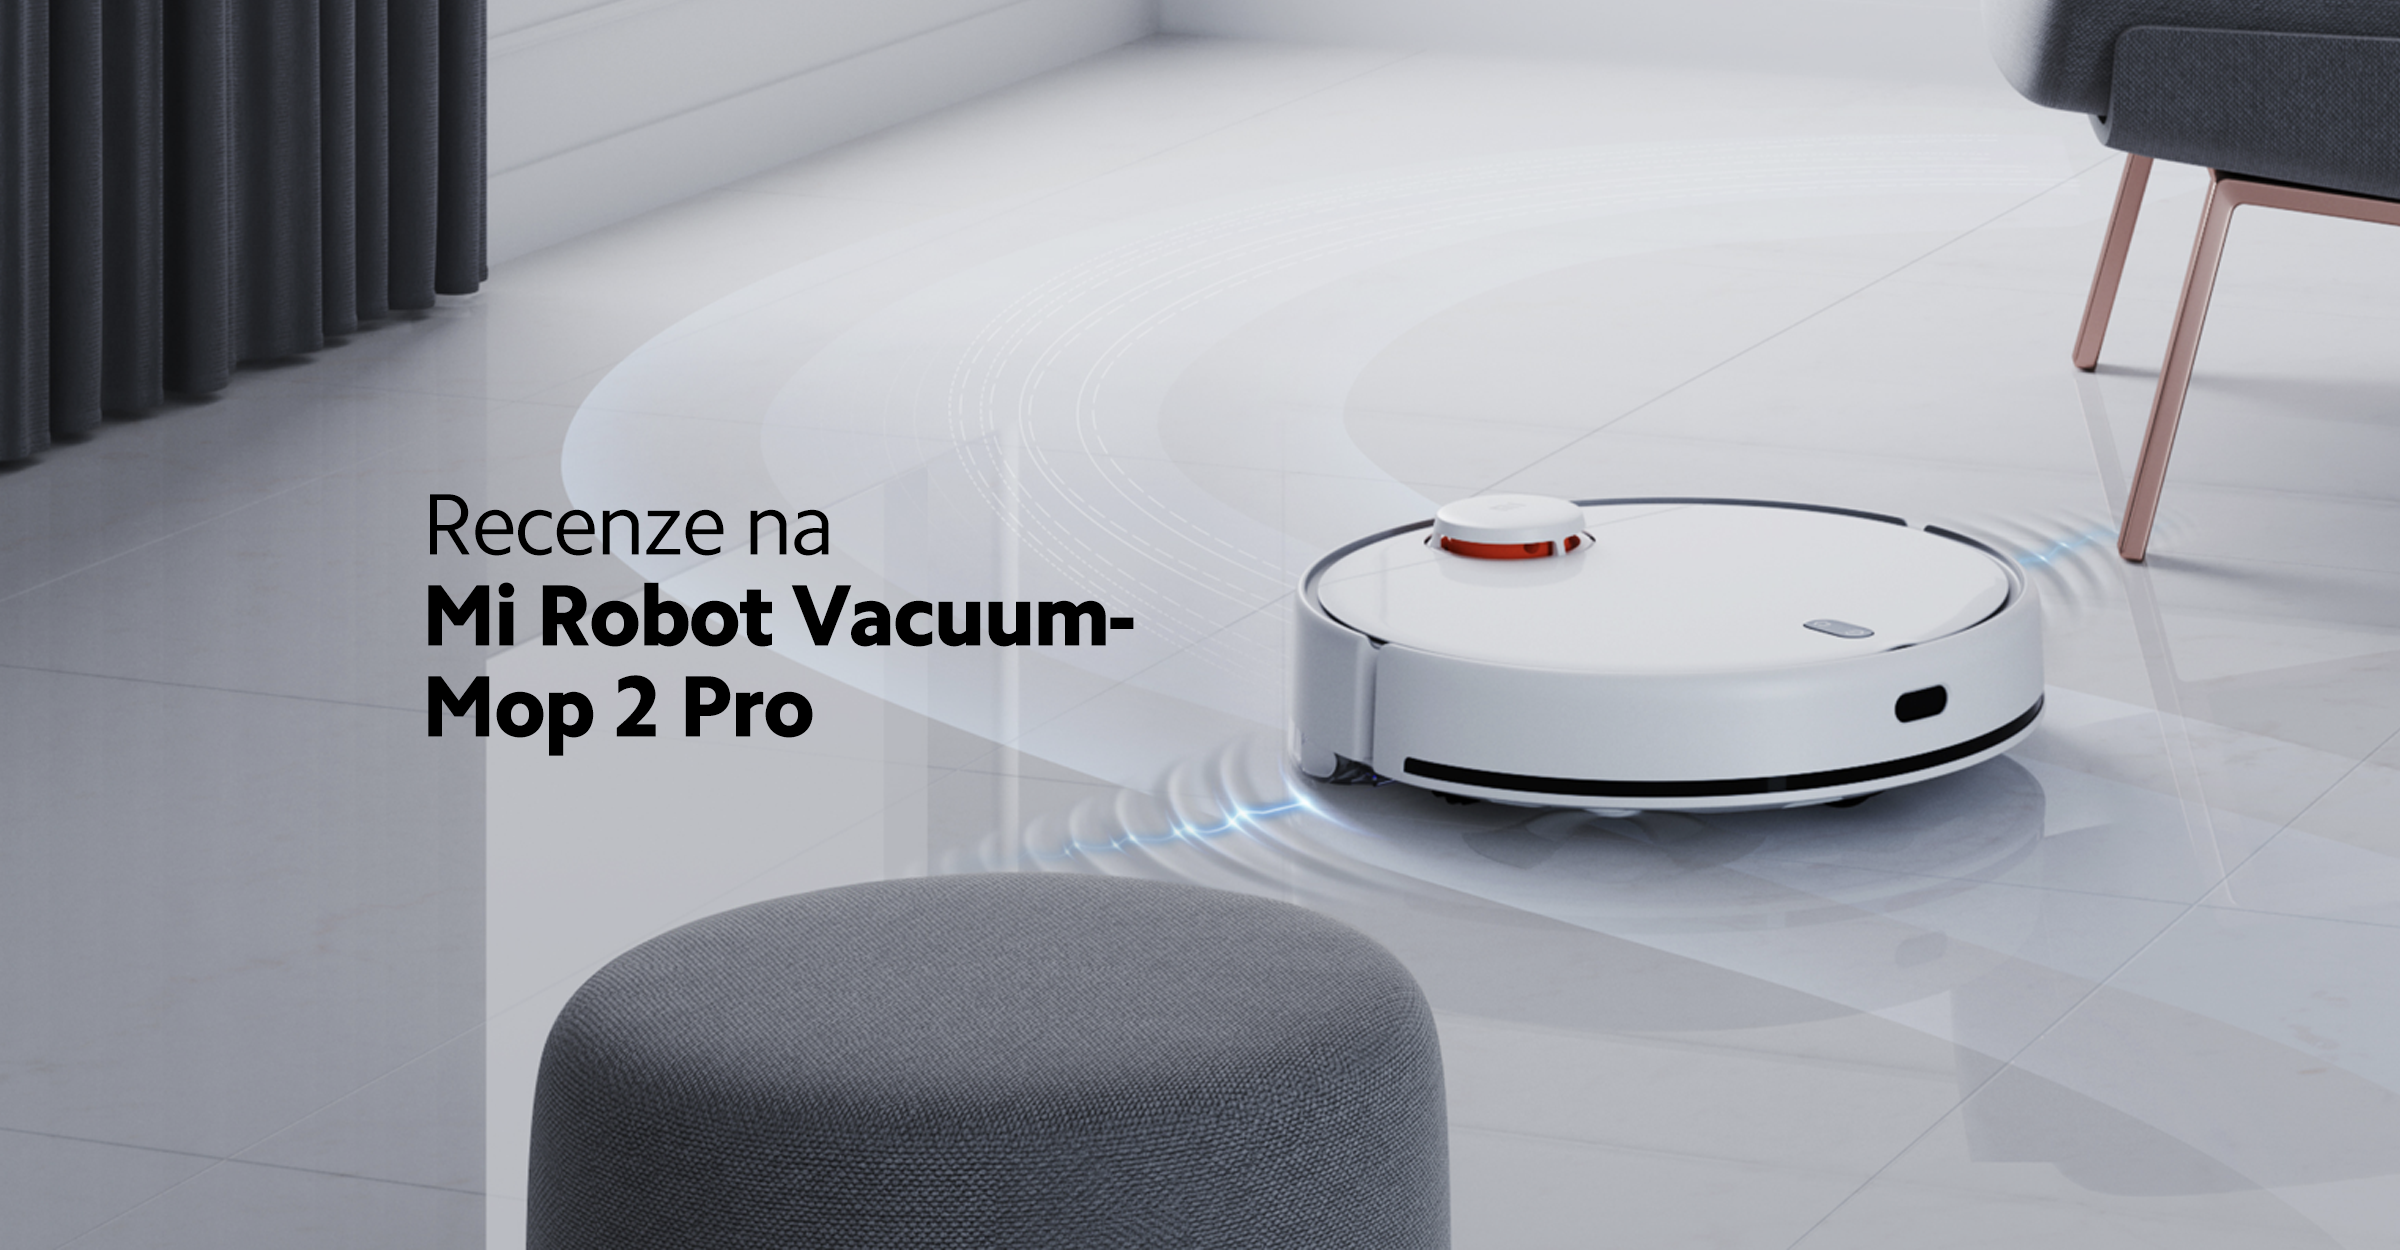 Recenze na Xiaomi Mi Robot Vacuum Mop 2 Pro